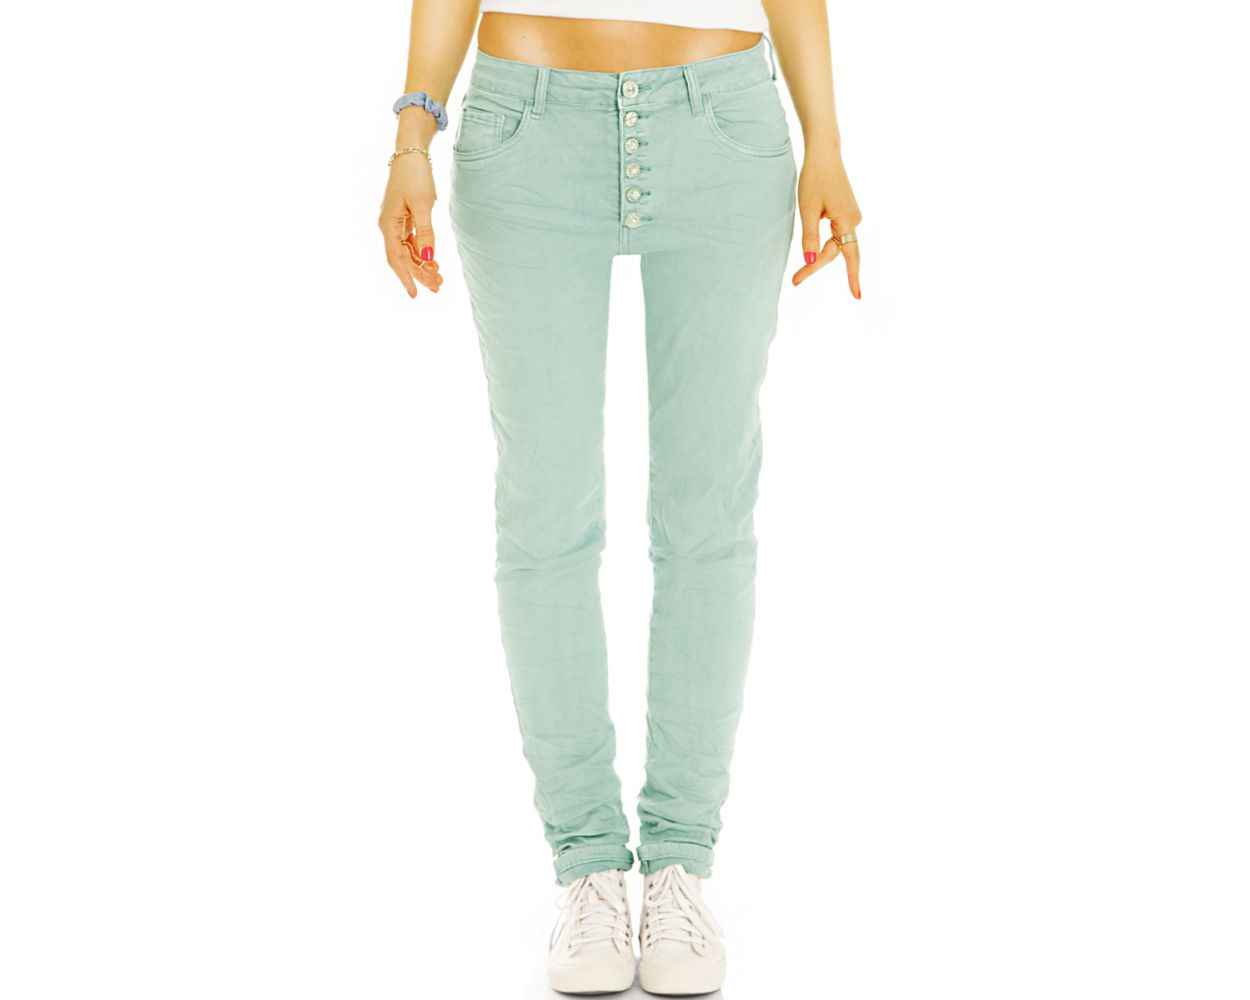 BE STYLED mit Tappered Low Waist - Damen Fit Regular Medium Stretch Jeans - j43p Knopfleiste - - Bequeme Slim Hose 